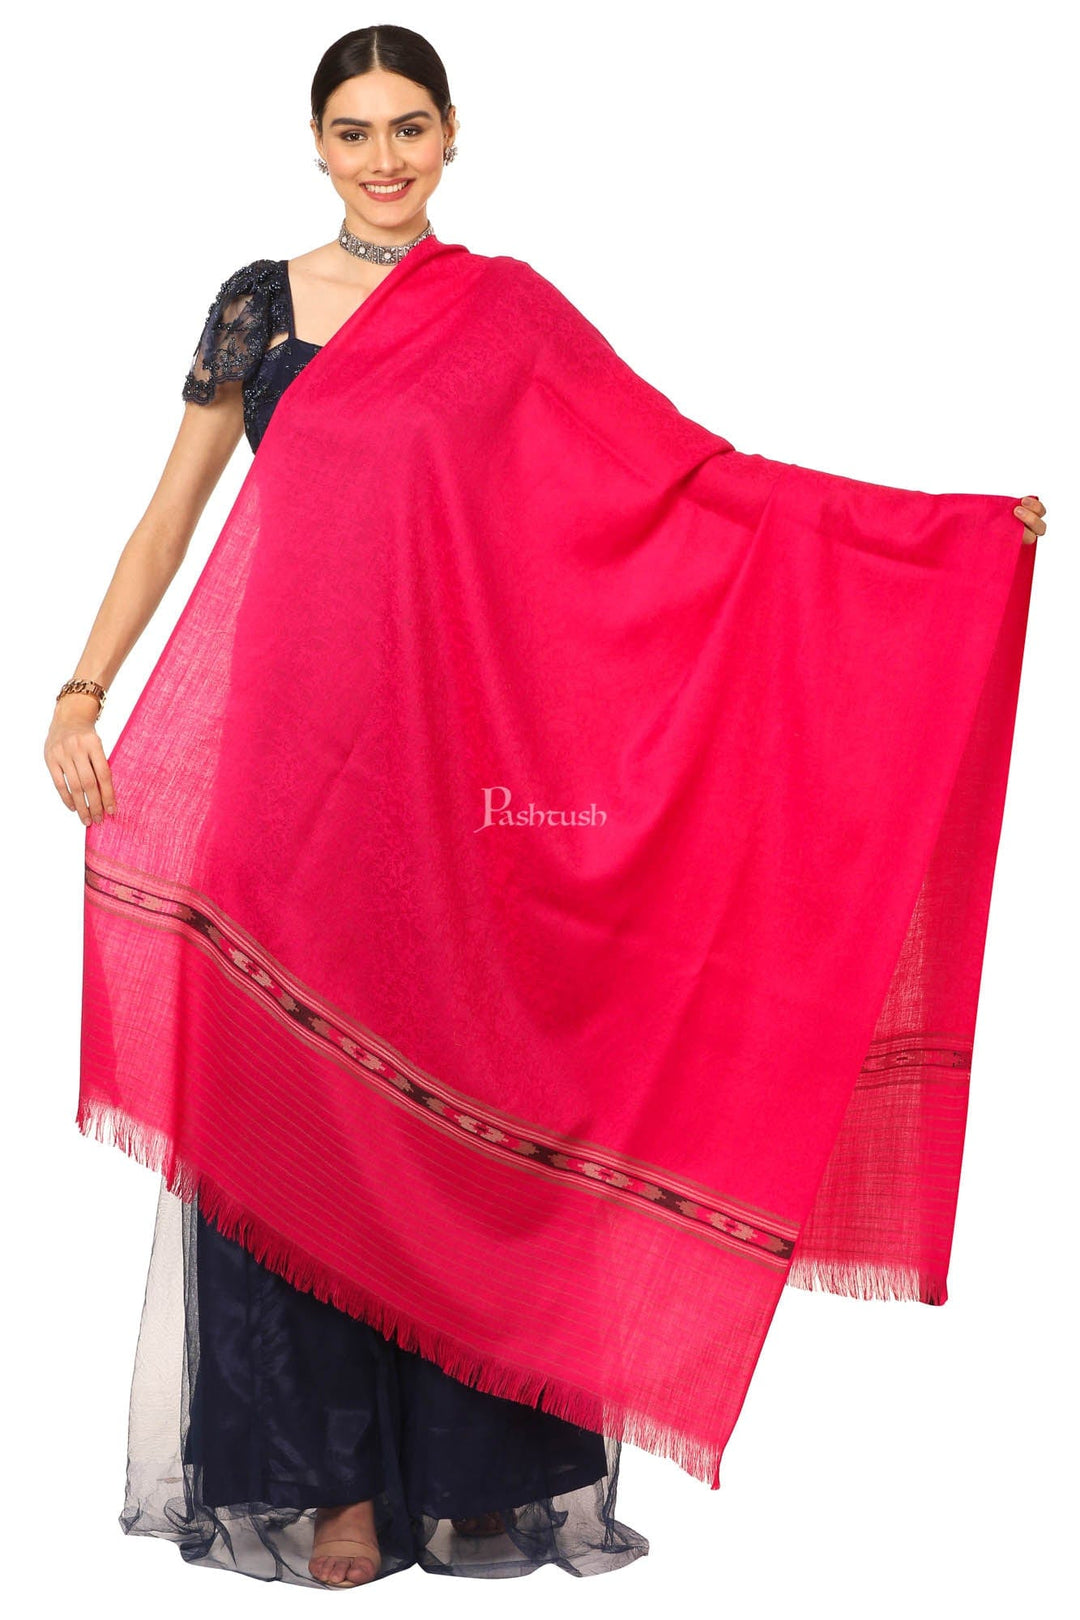 Pashtush India Womens Shawls Pashtush Women'S Fine Wool Shawl, Soft And Warm, Aztec Design, Jacquard Weave - Pink